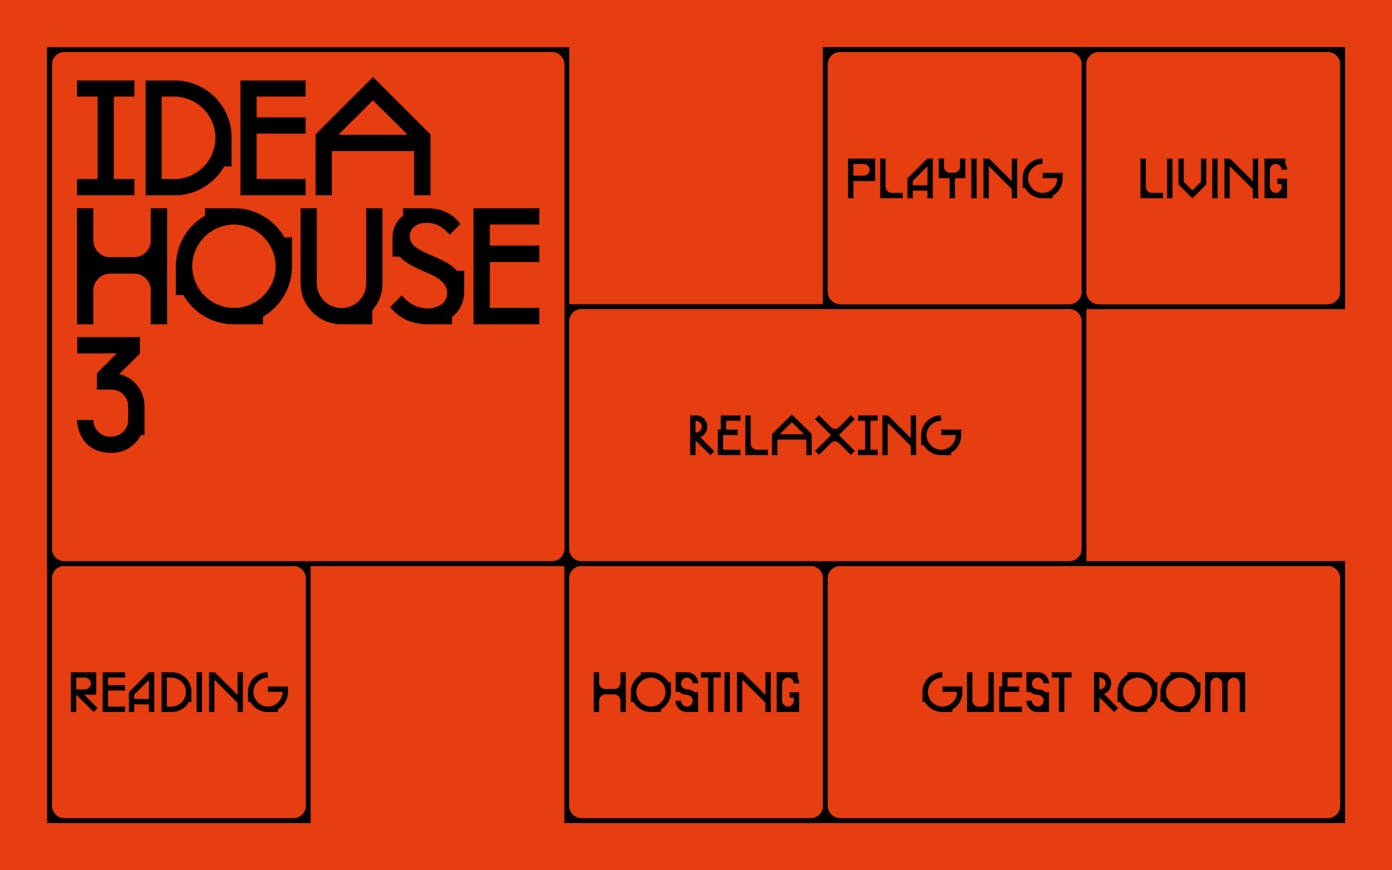 Logo: Idea House 3